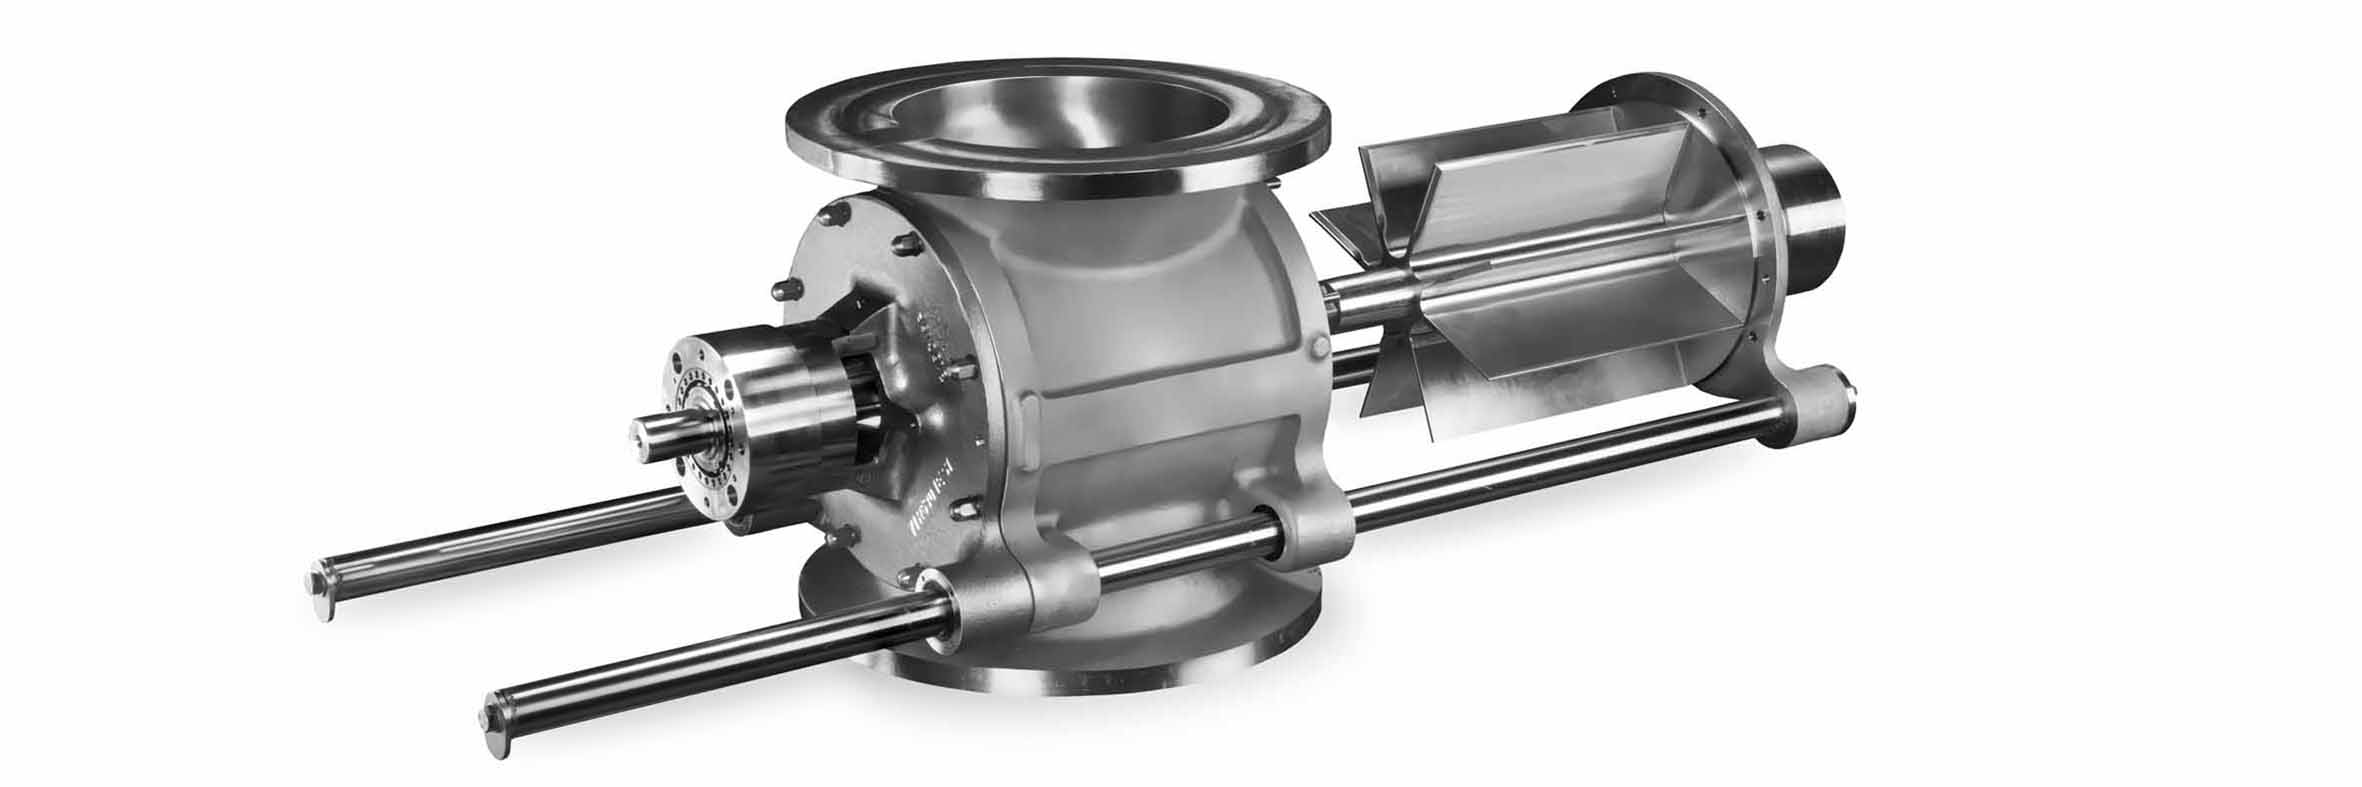 rotary valve castings